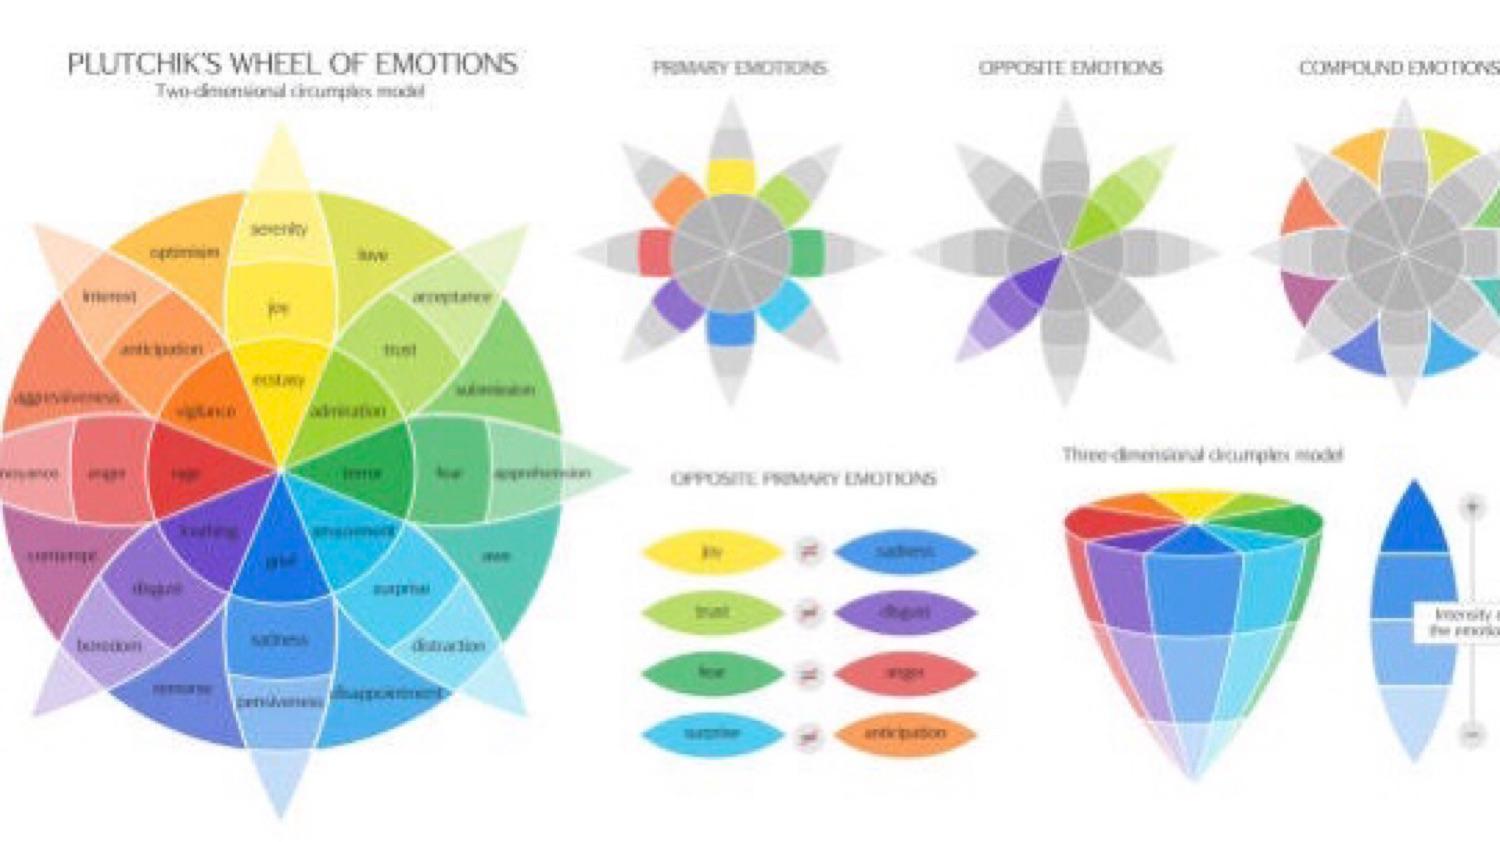 The Emotion Wheel